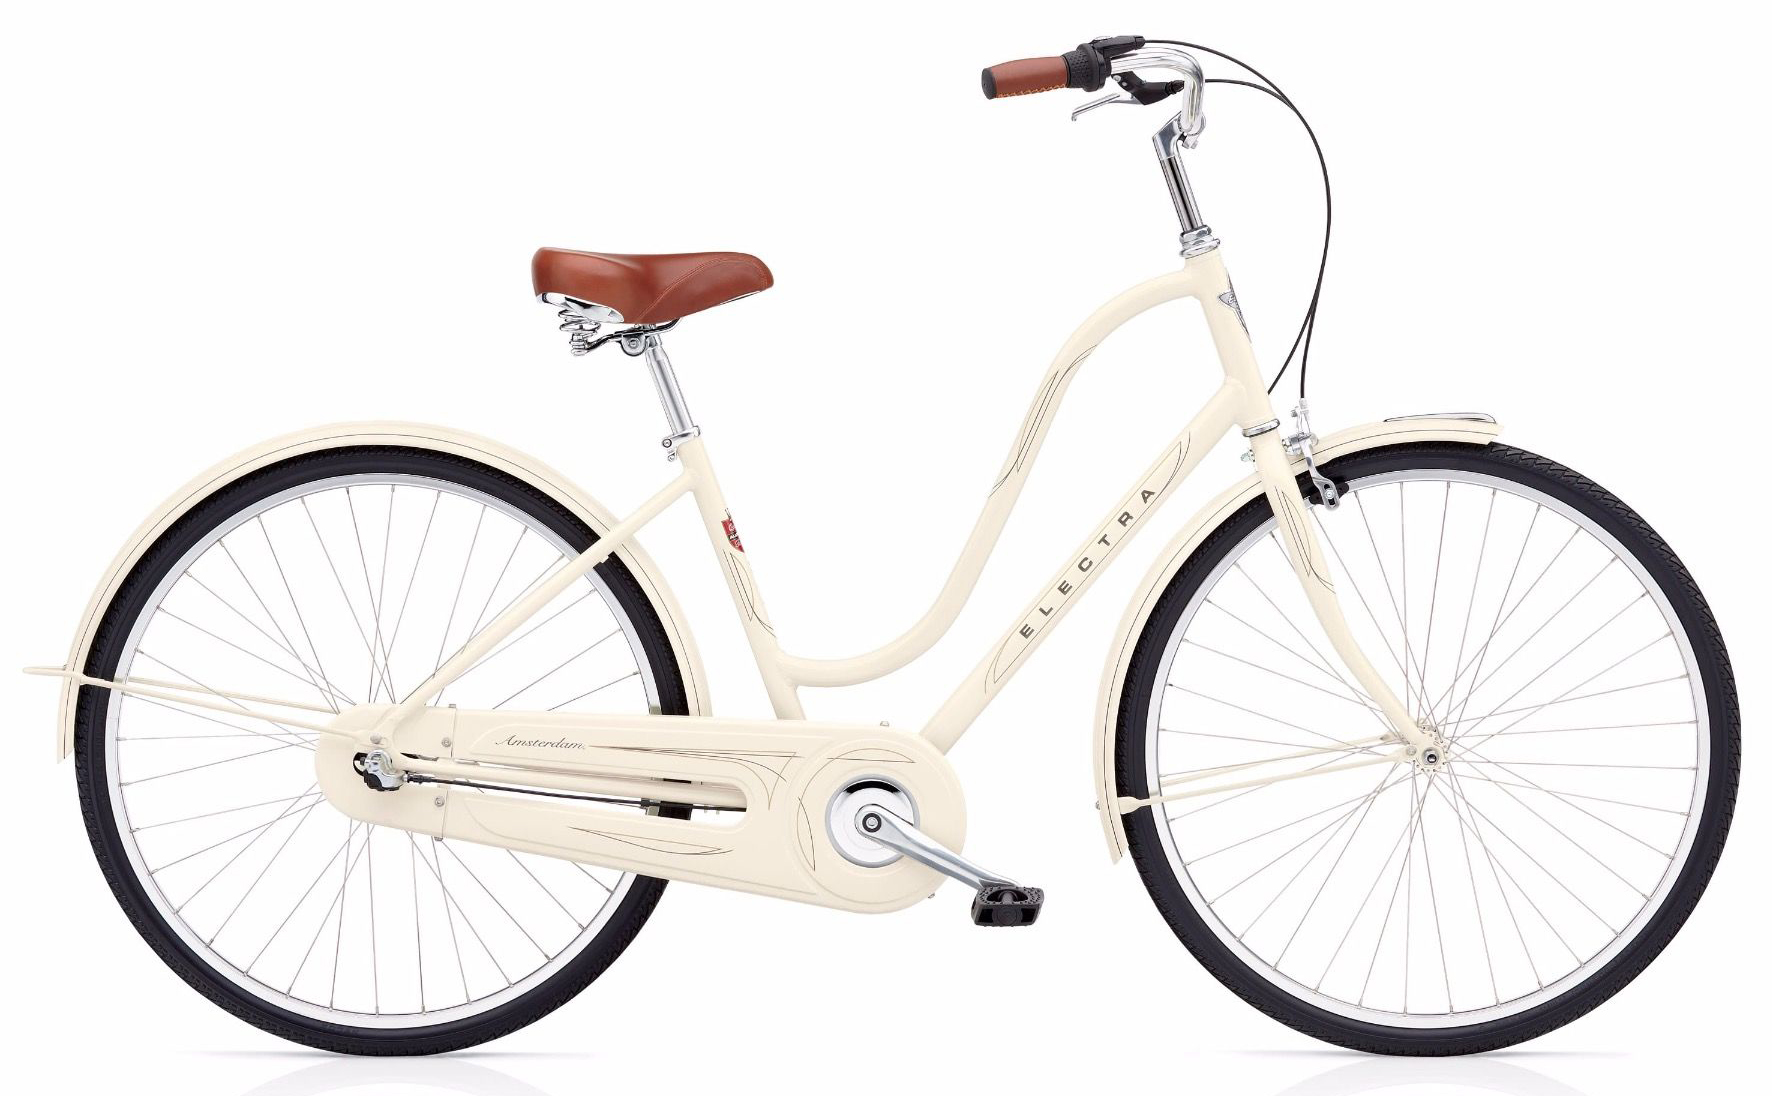  Велосипед Electra Amsterdam Original 3i ladies 2019